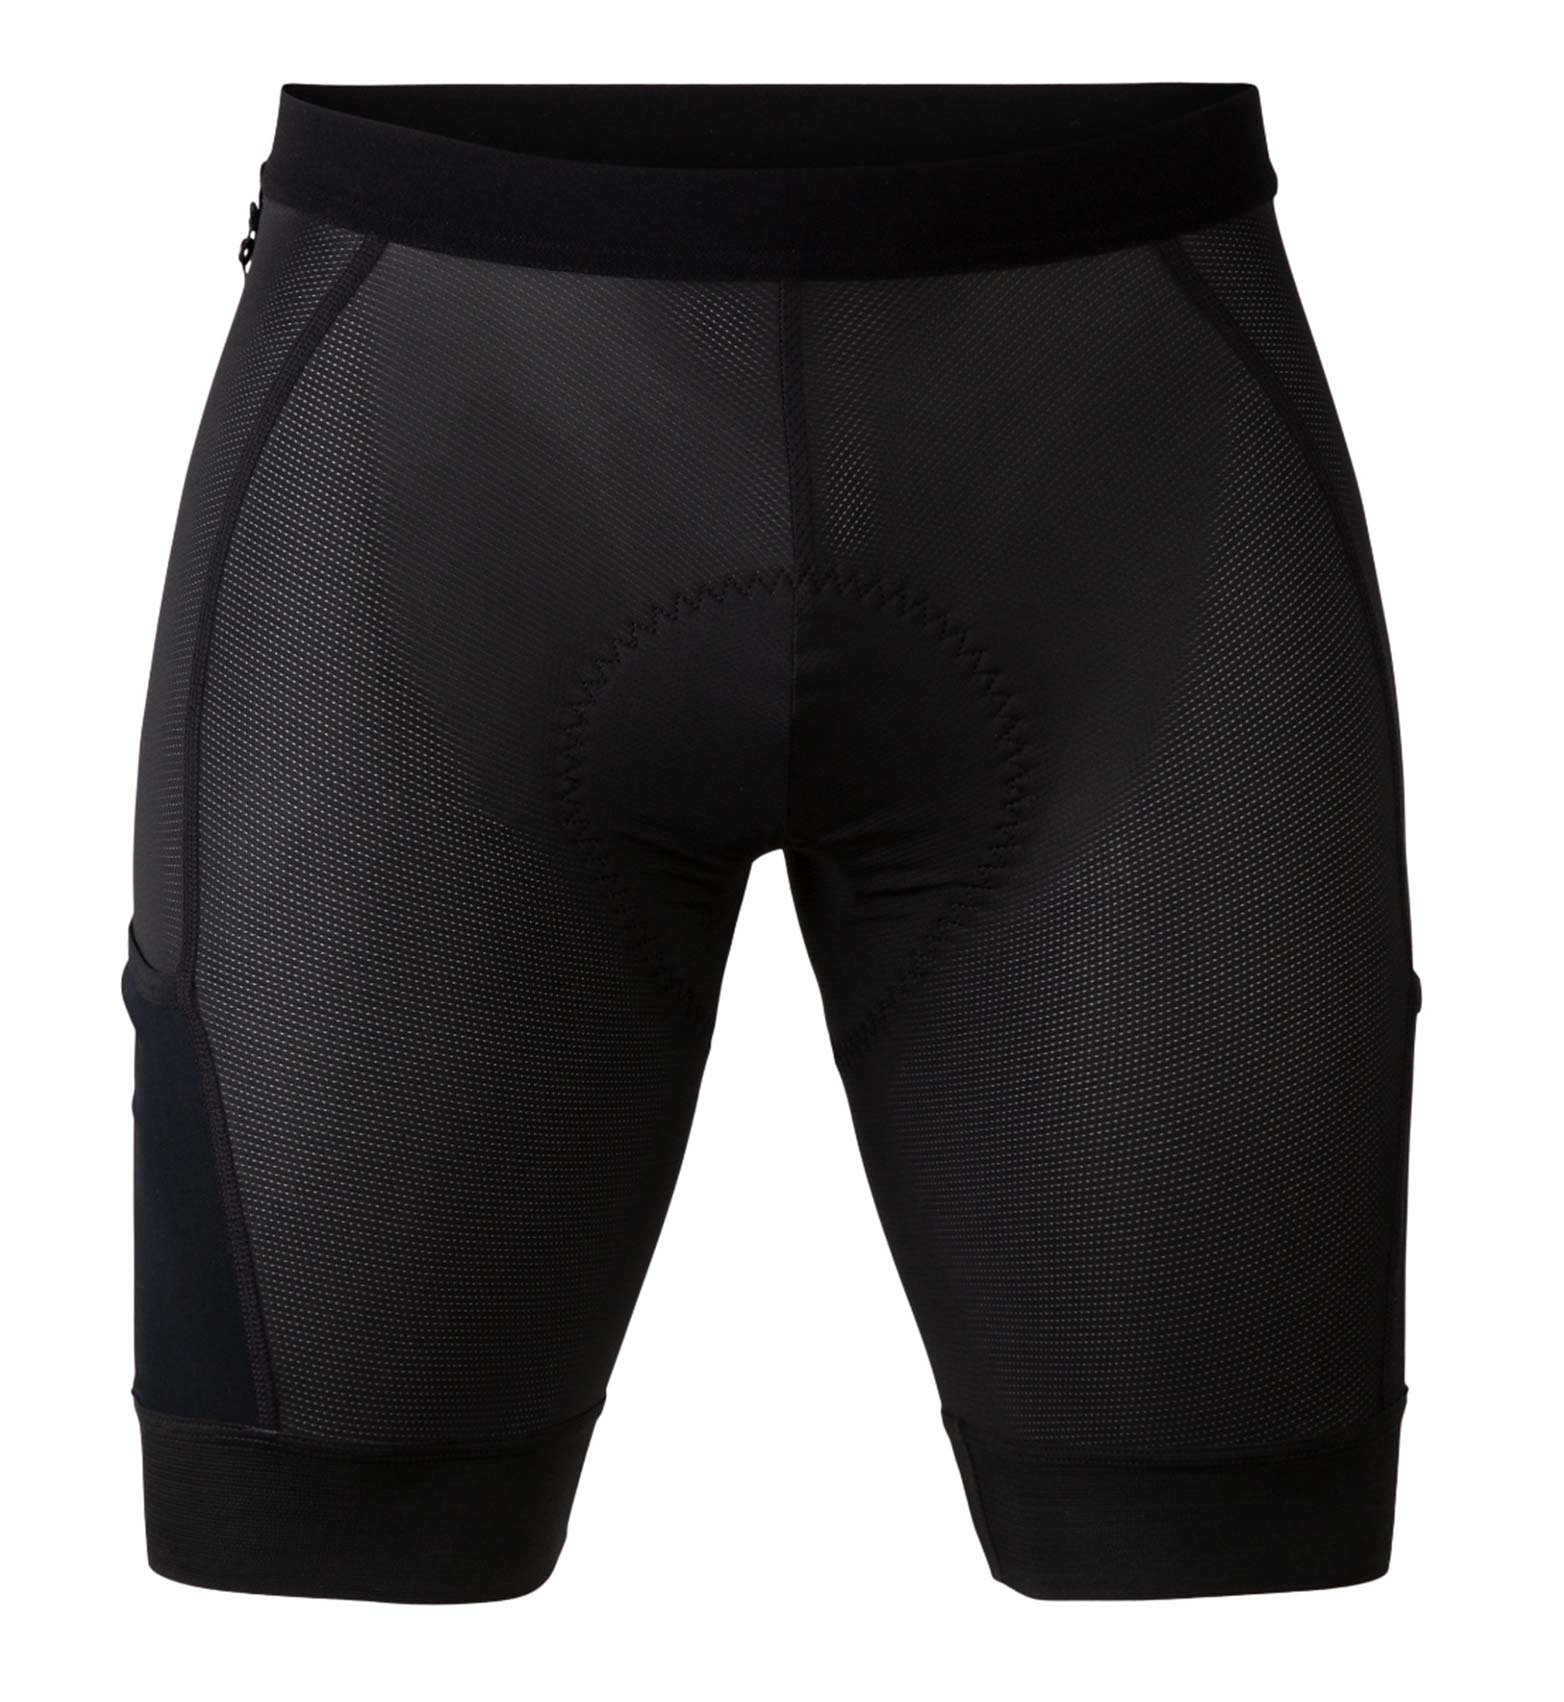 men's ultralight liner bib shorts with swat